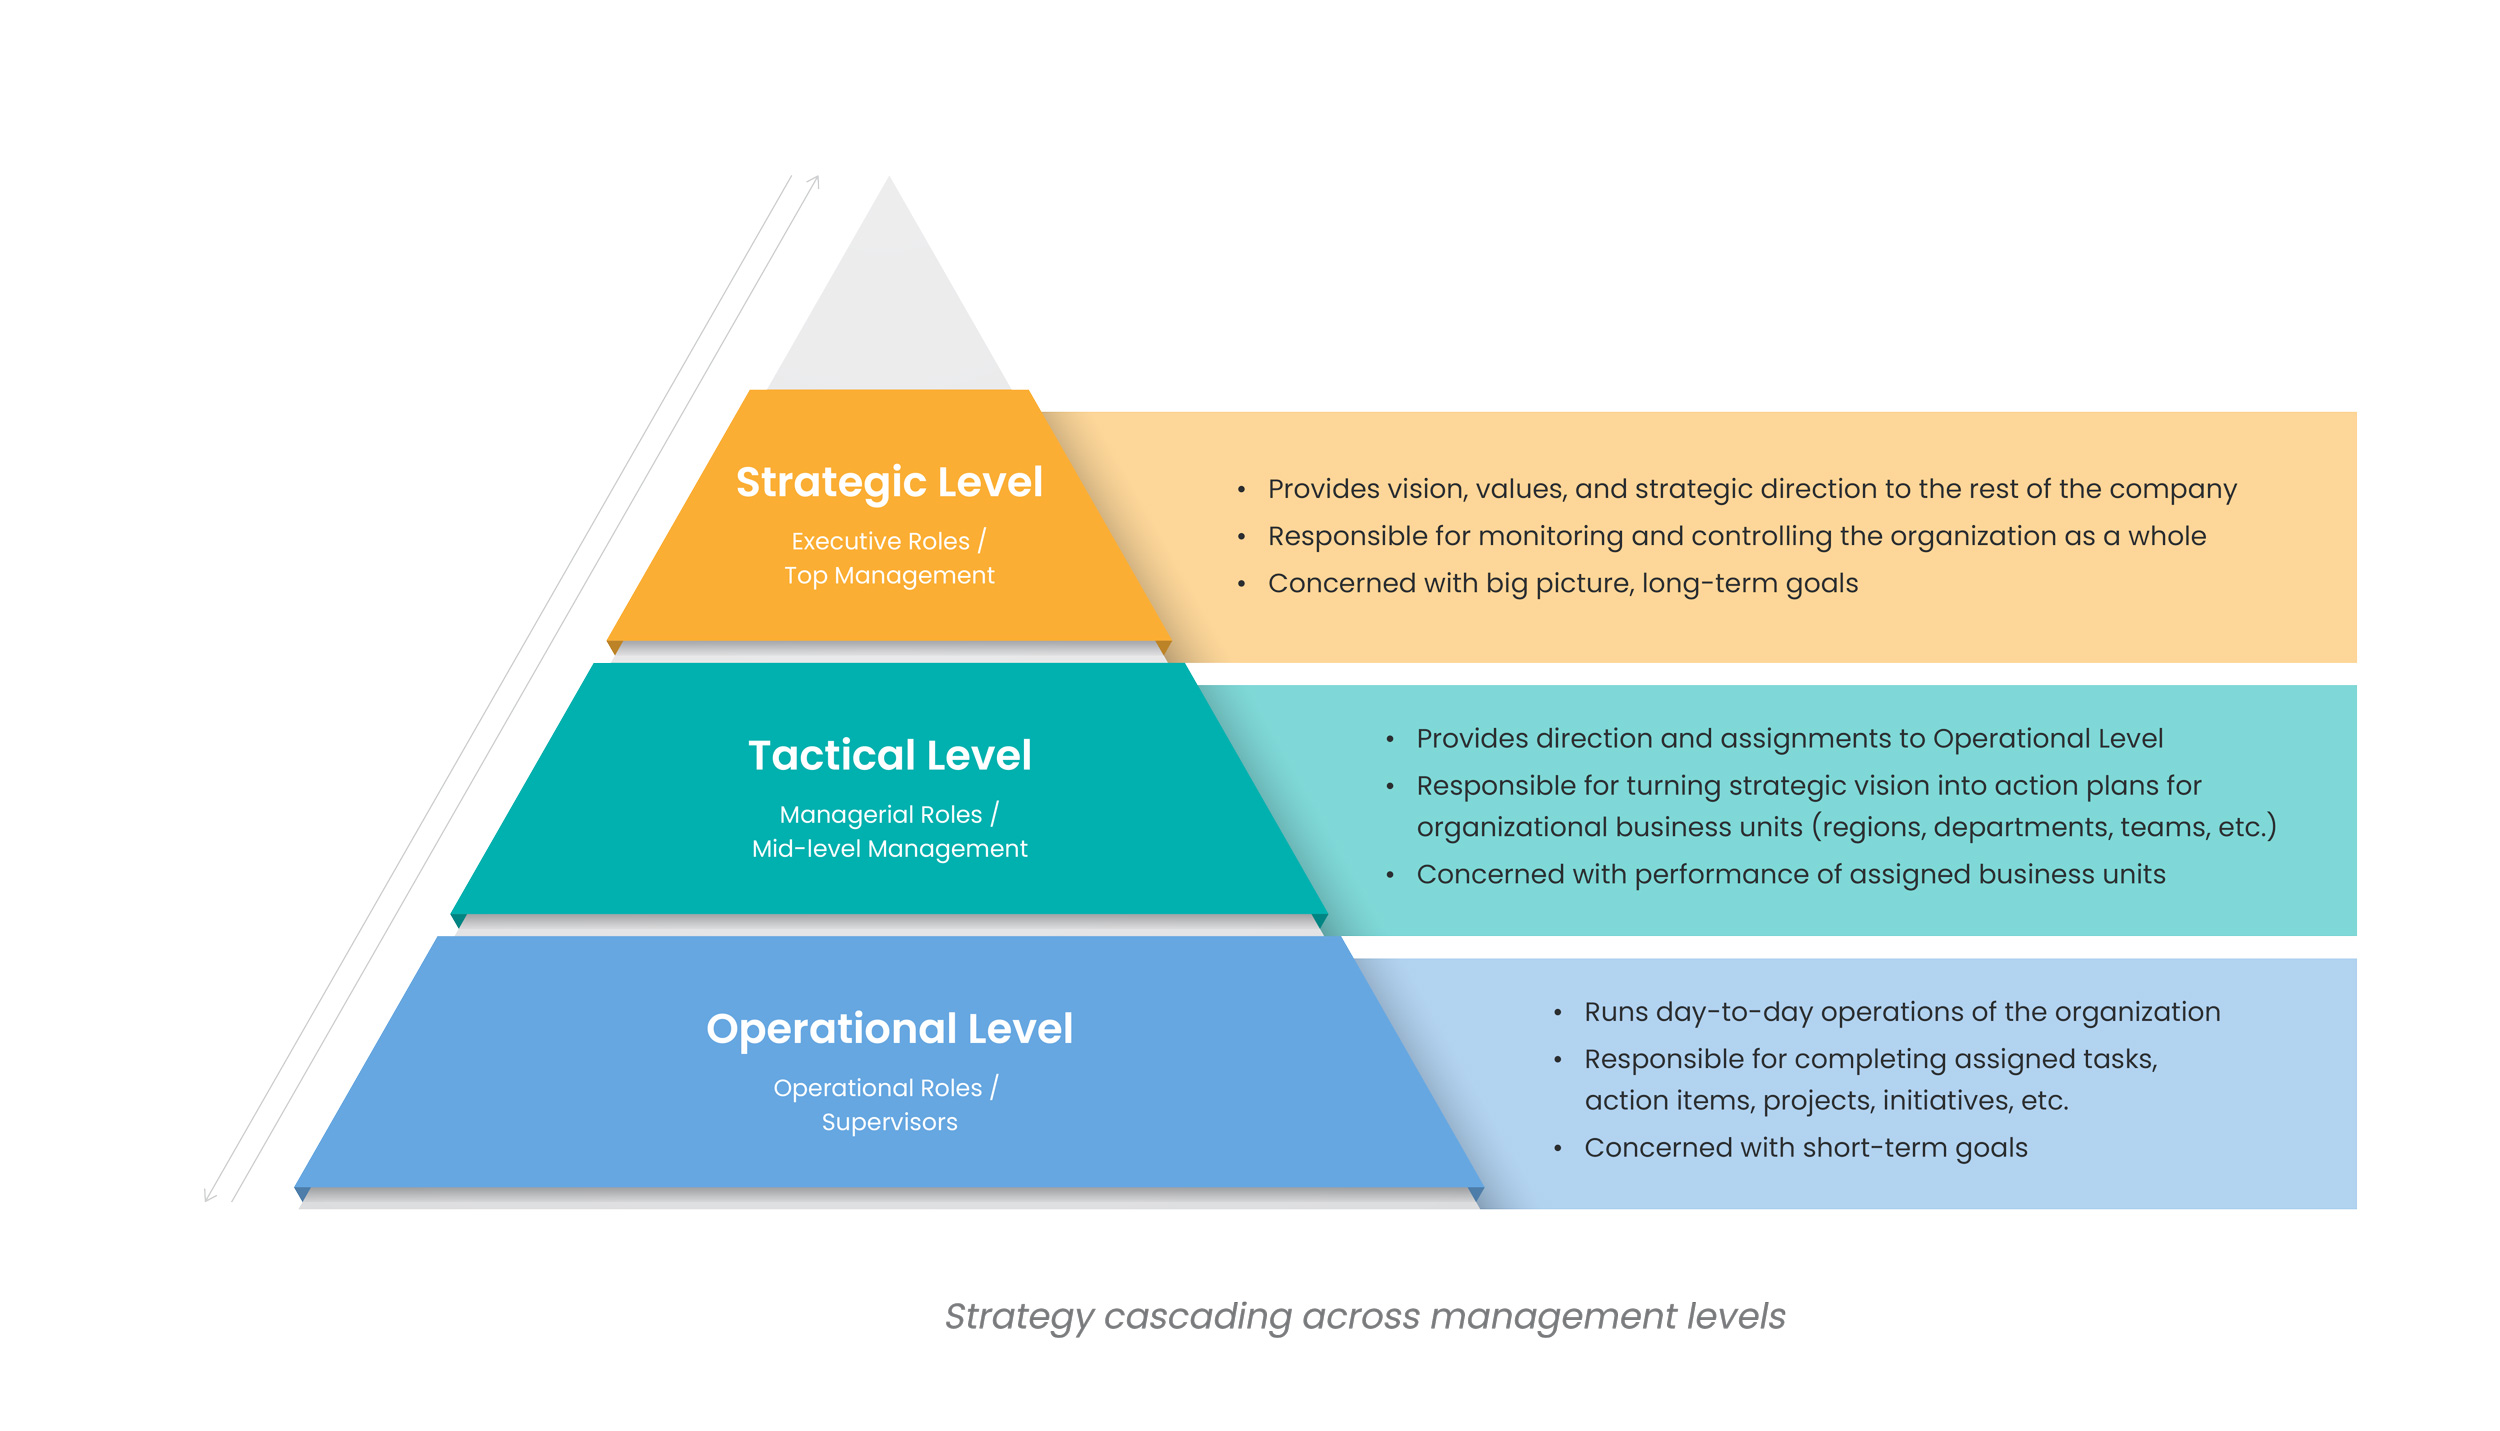 Strategy cascading across management levels